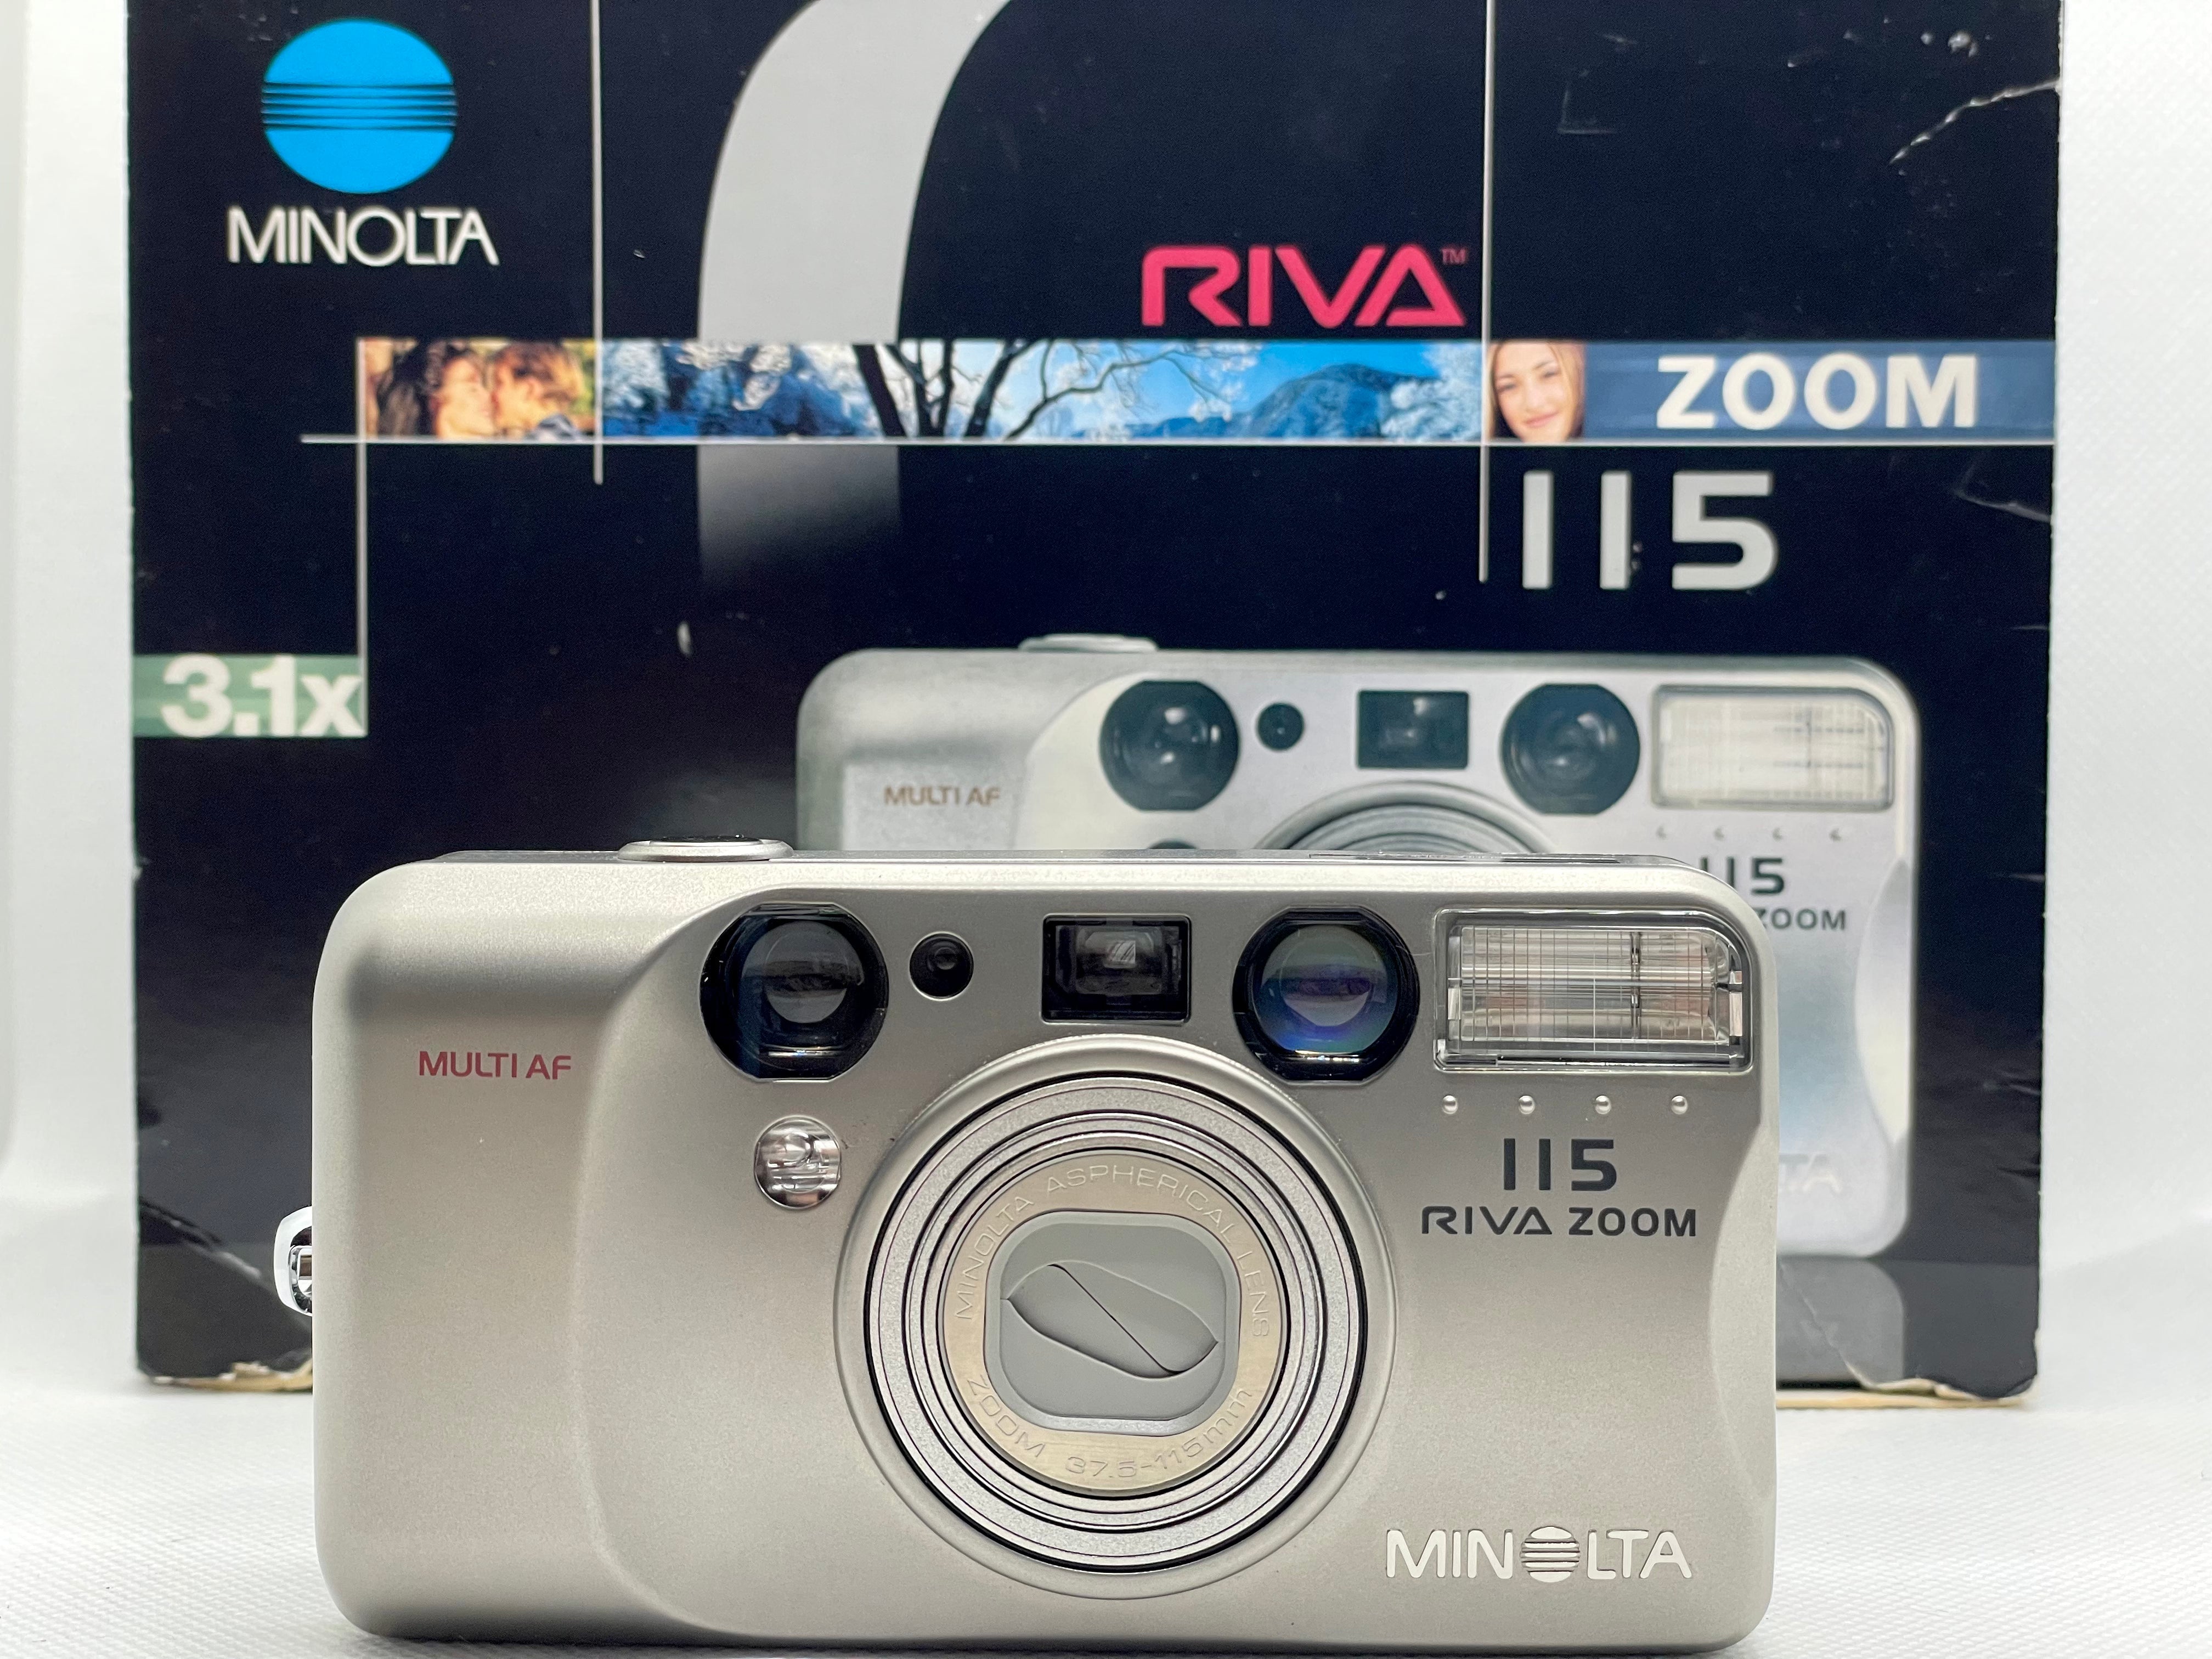 Minolta Riva Zoom 115 With Box